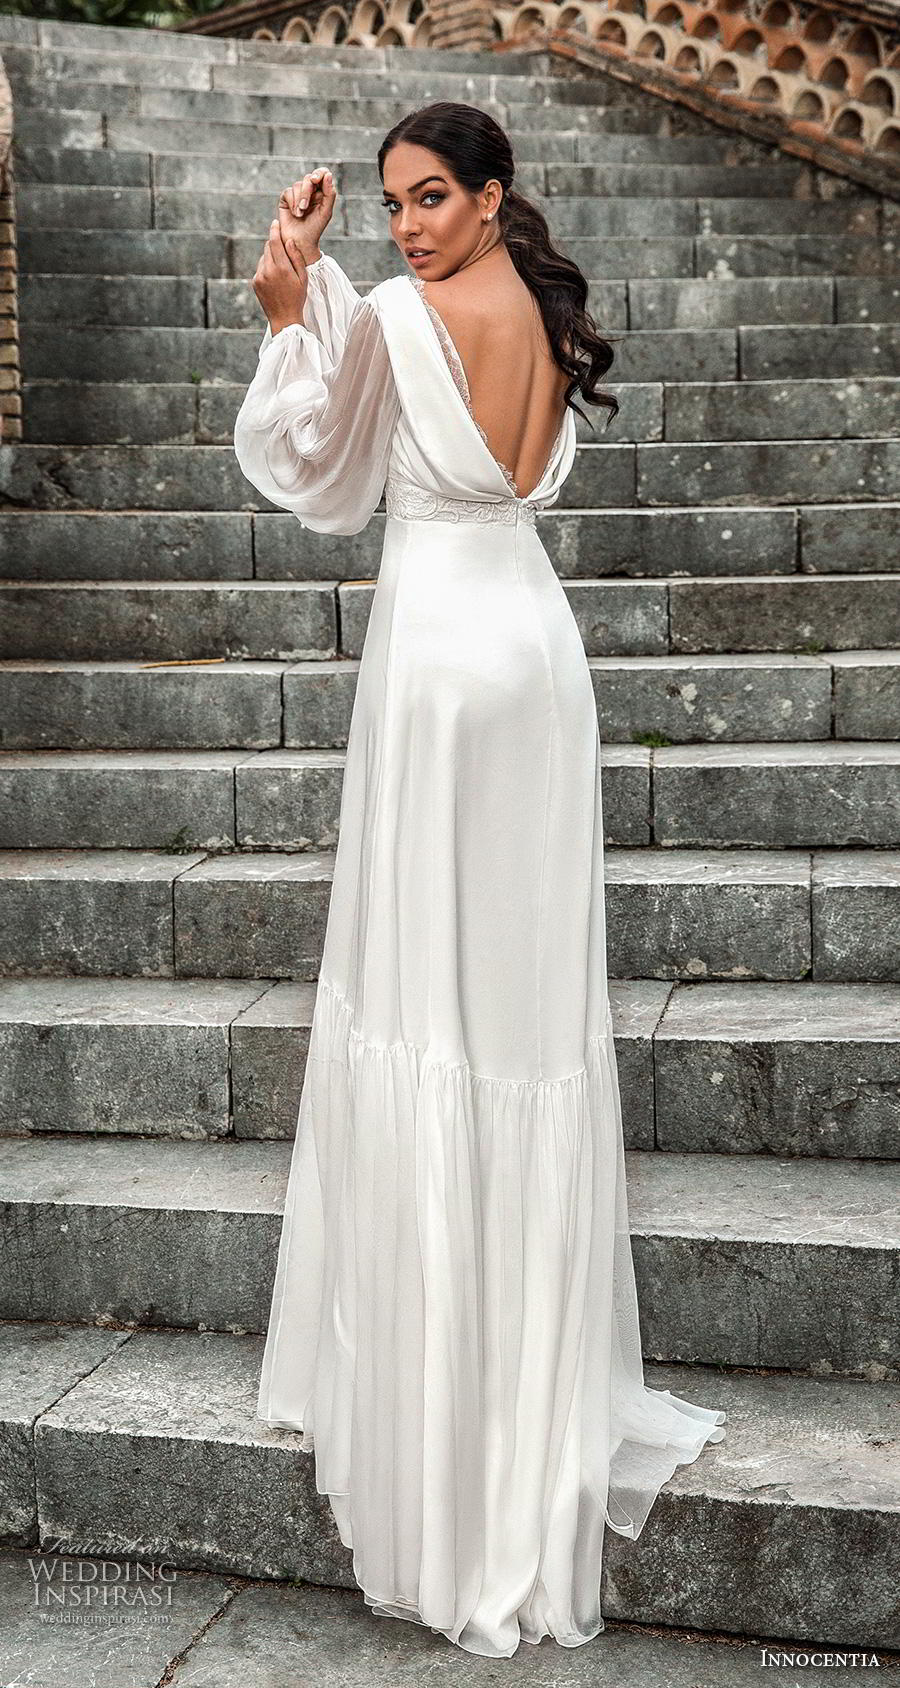 Innocentia 2019 toarmina bridal long bishop sleeves v neck simple elegant a  line wedding dress backless low back chapel train (6) bv